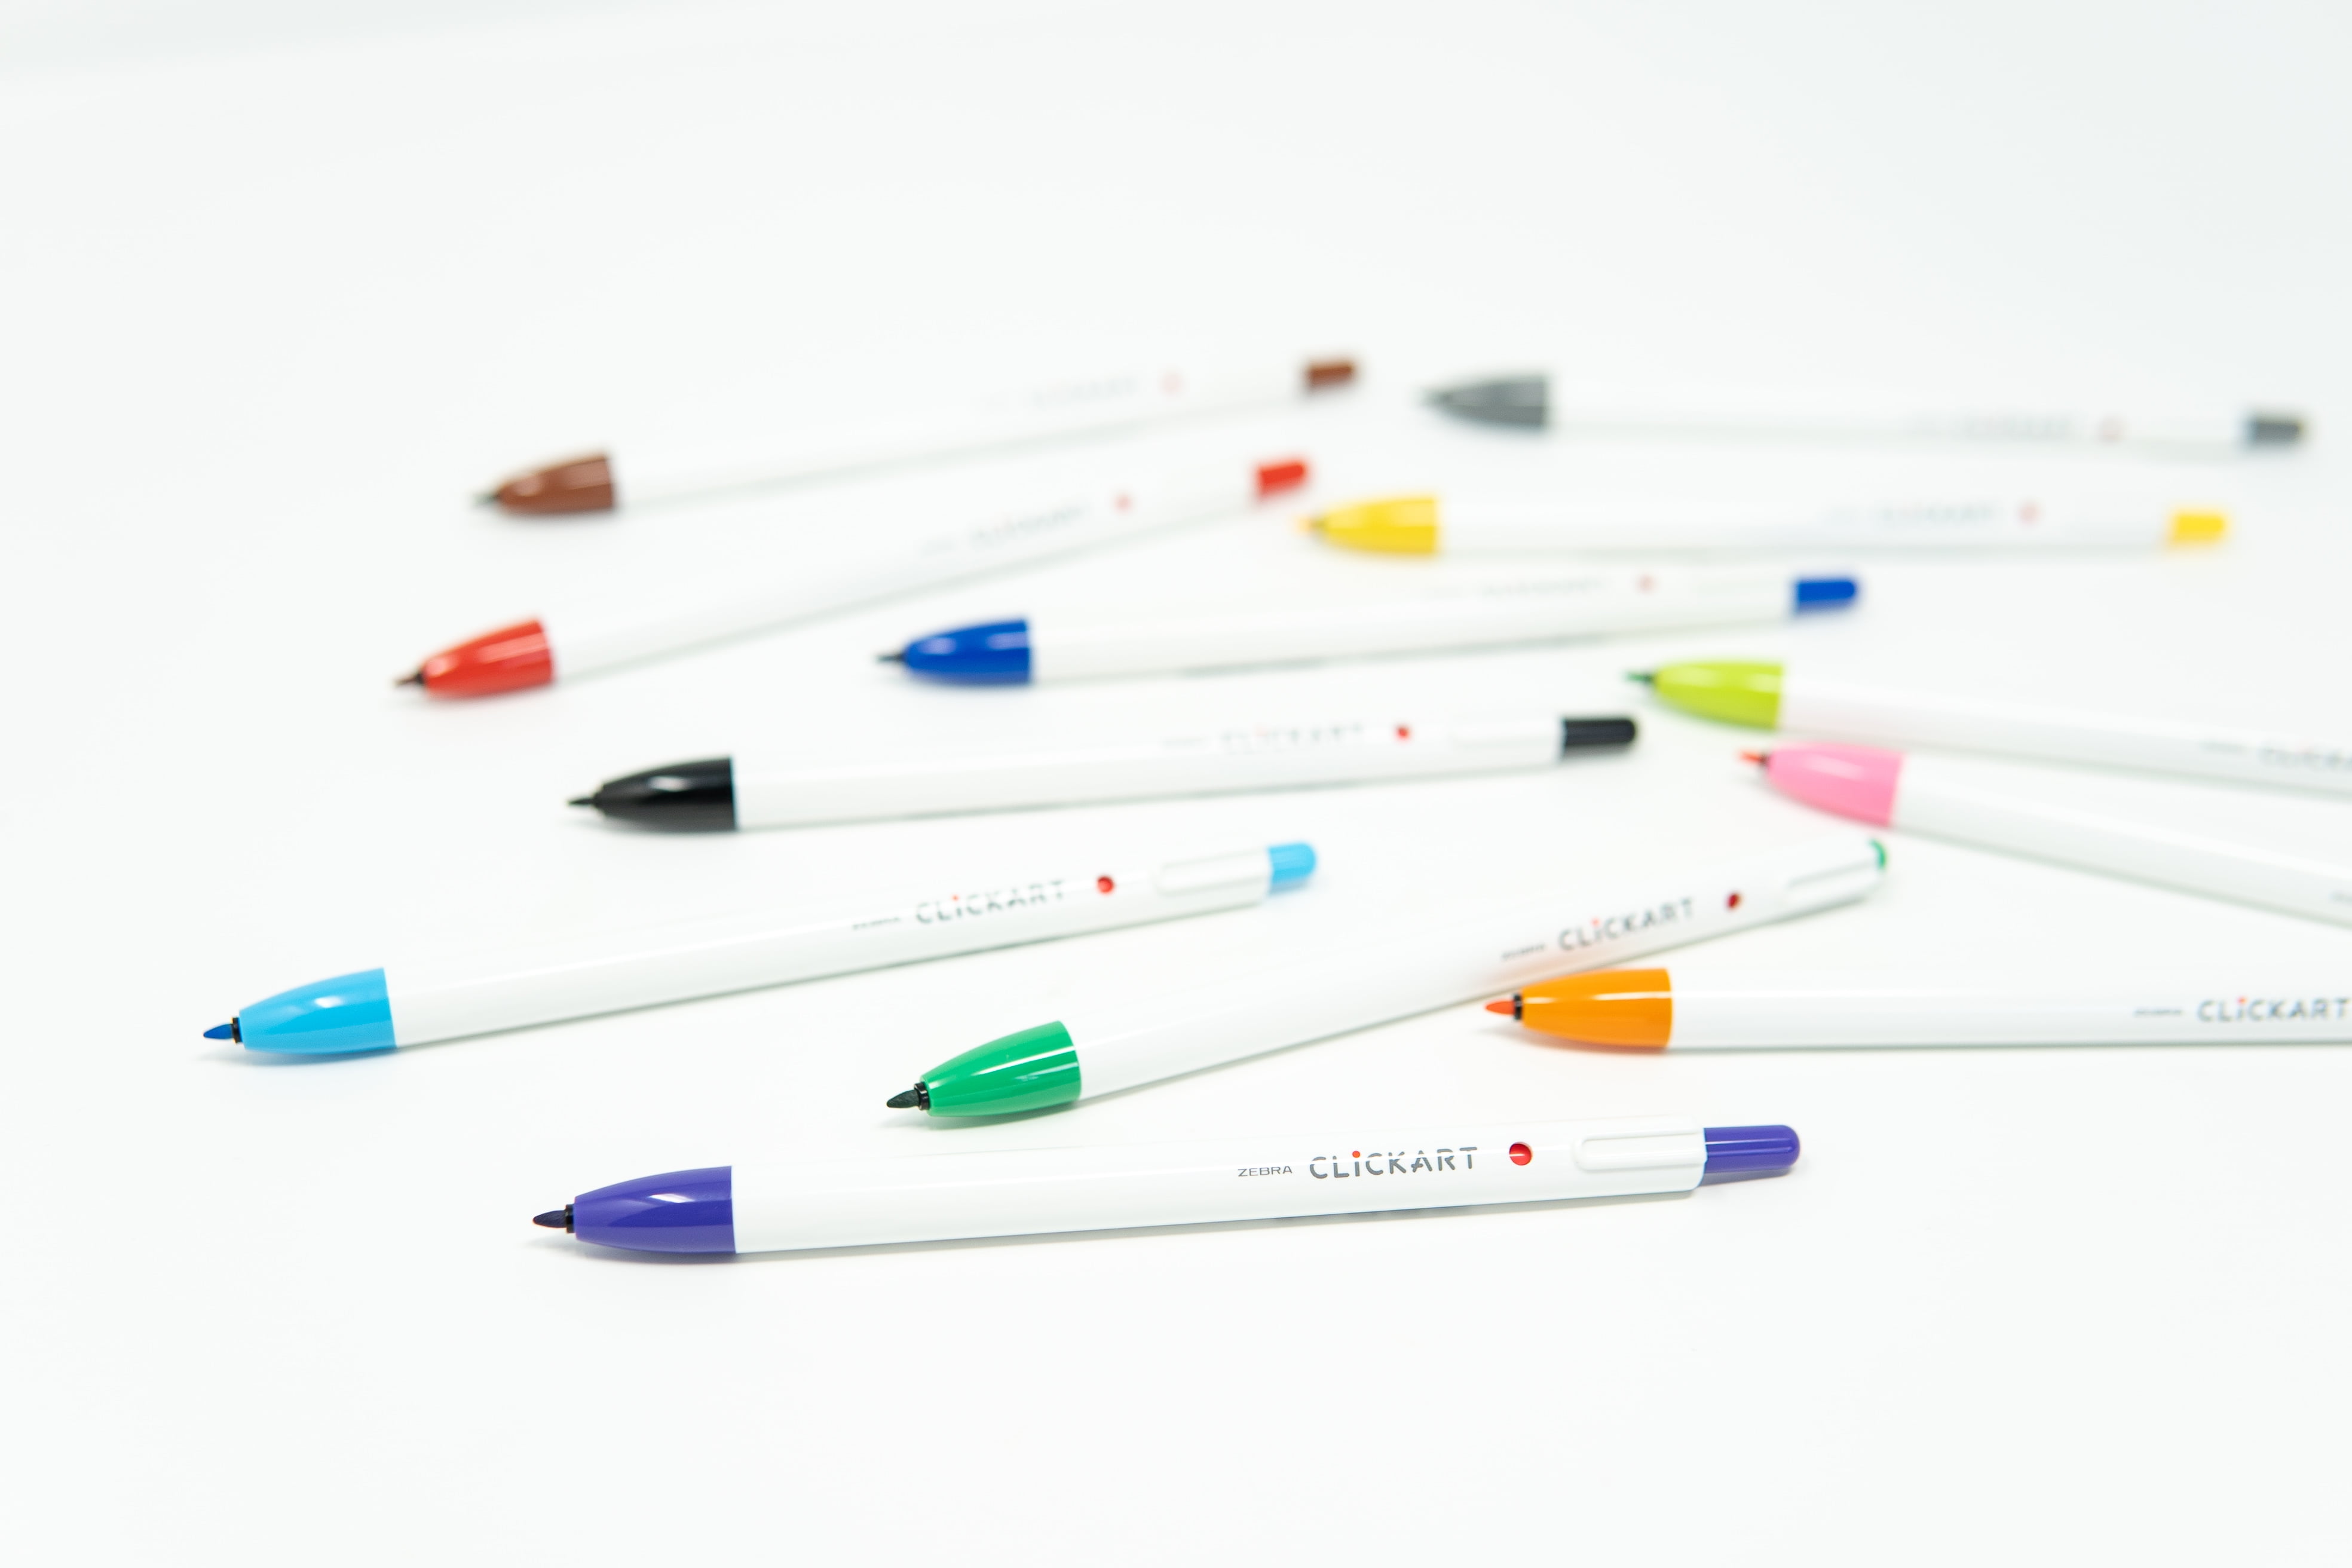 Zebra Clickart Porous Point Pen, Retractable, Fine 0.6 mm, Assorted Ink Colors, White Barrel, 12/Pack